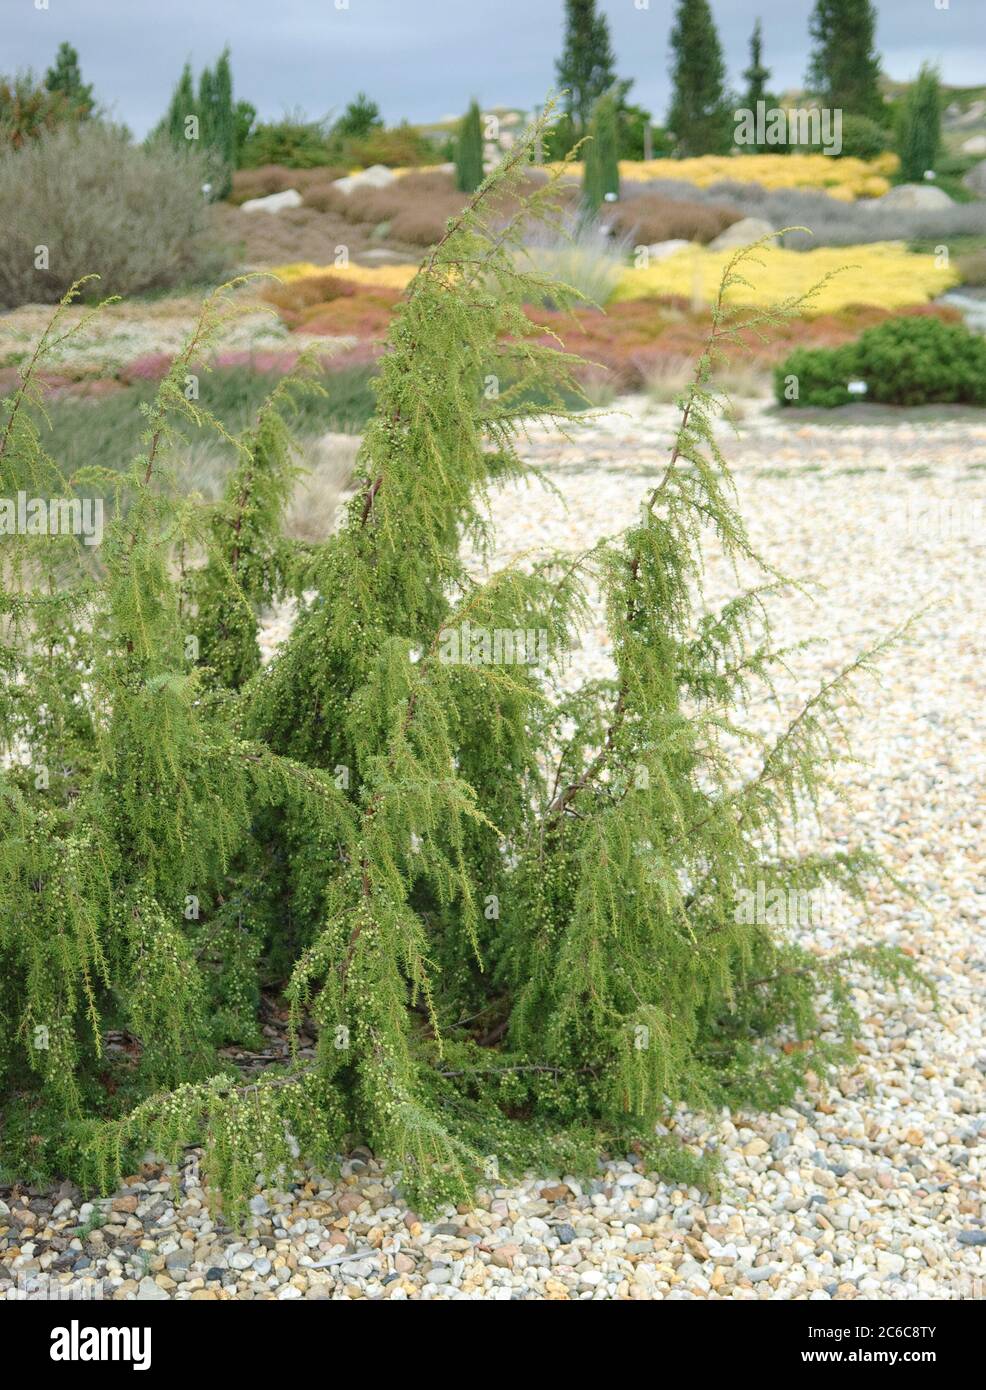 Heidegarten, Trauer-Wacholder , Juniperus communis Wilsede, Heidegarten, sadness juniper, Juniperus communis Wilsede Stock Photo